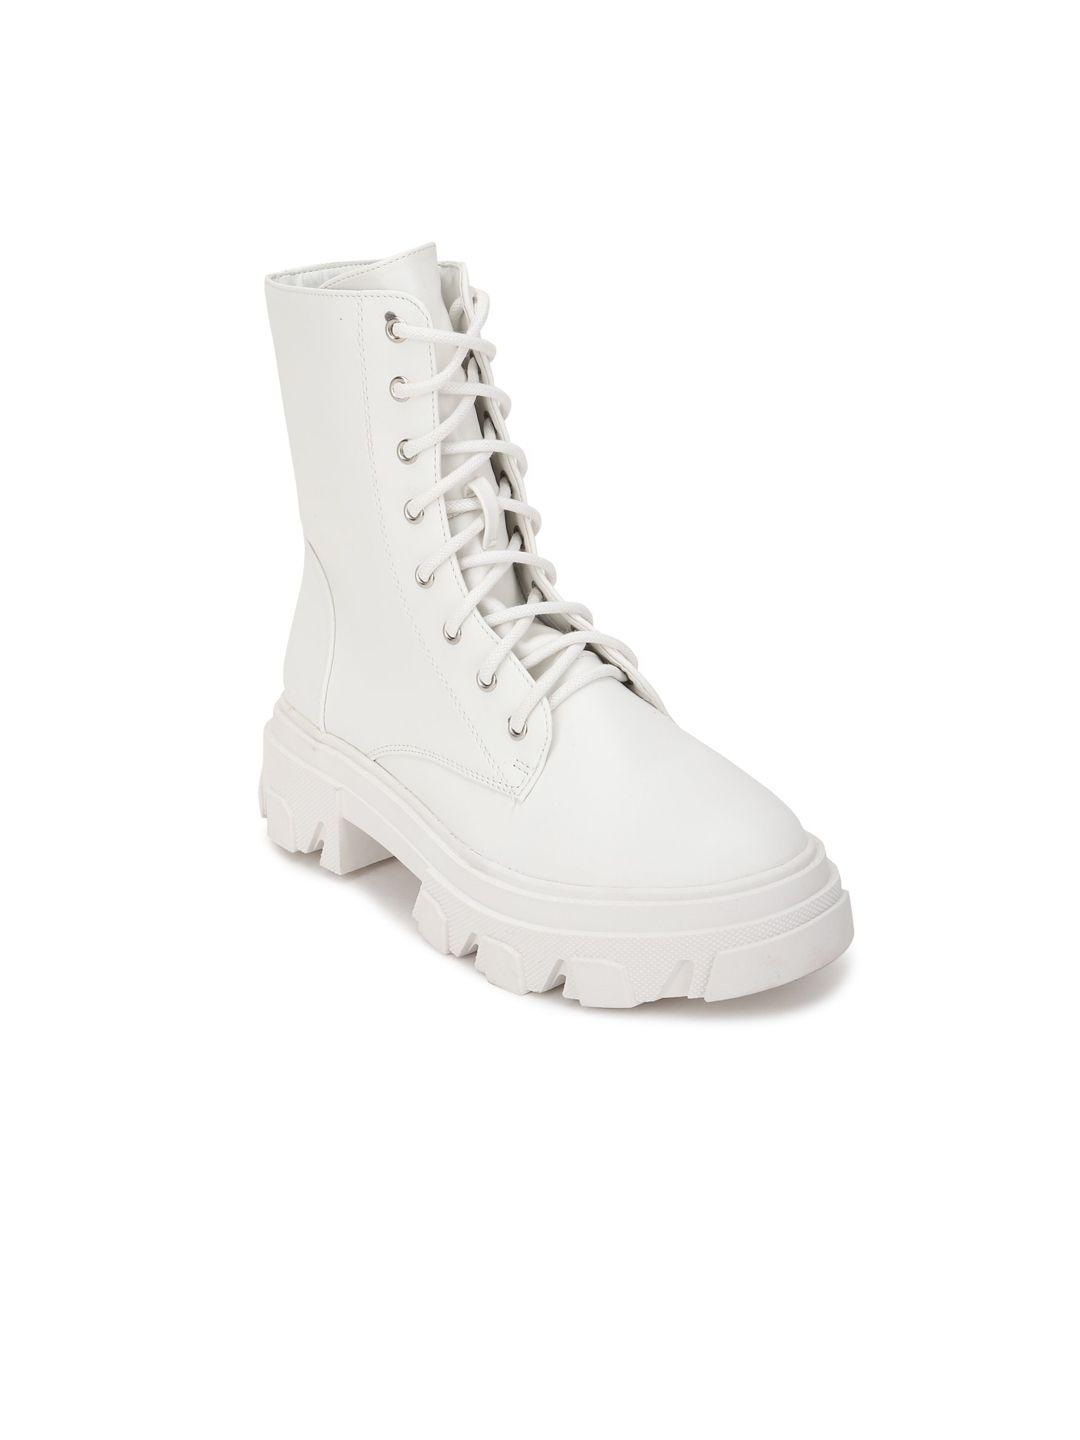 forever 21 white pu platform heeled boots